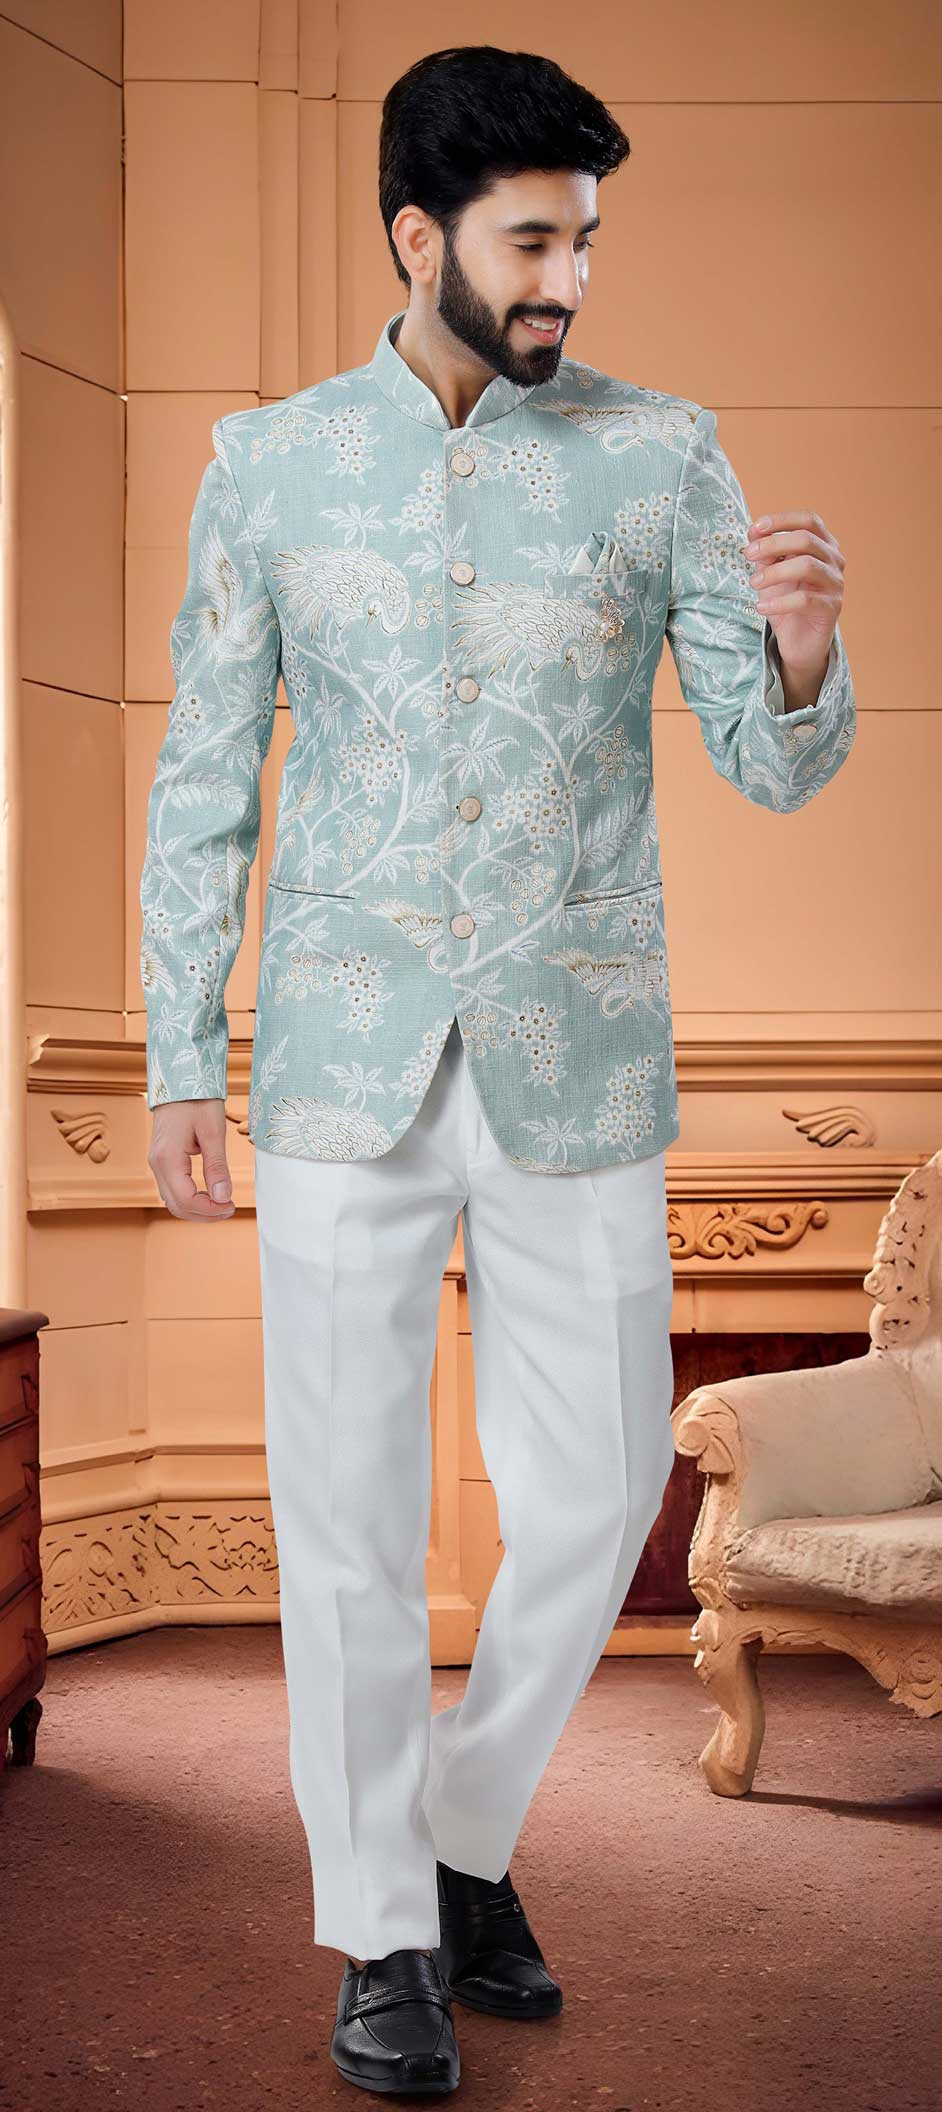 Jodhpuri Suit Designs: Style A Jodhpuri Suit For A Modern Look | Indian Wedding Saree